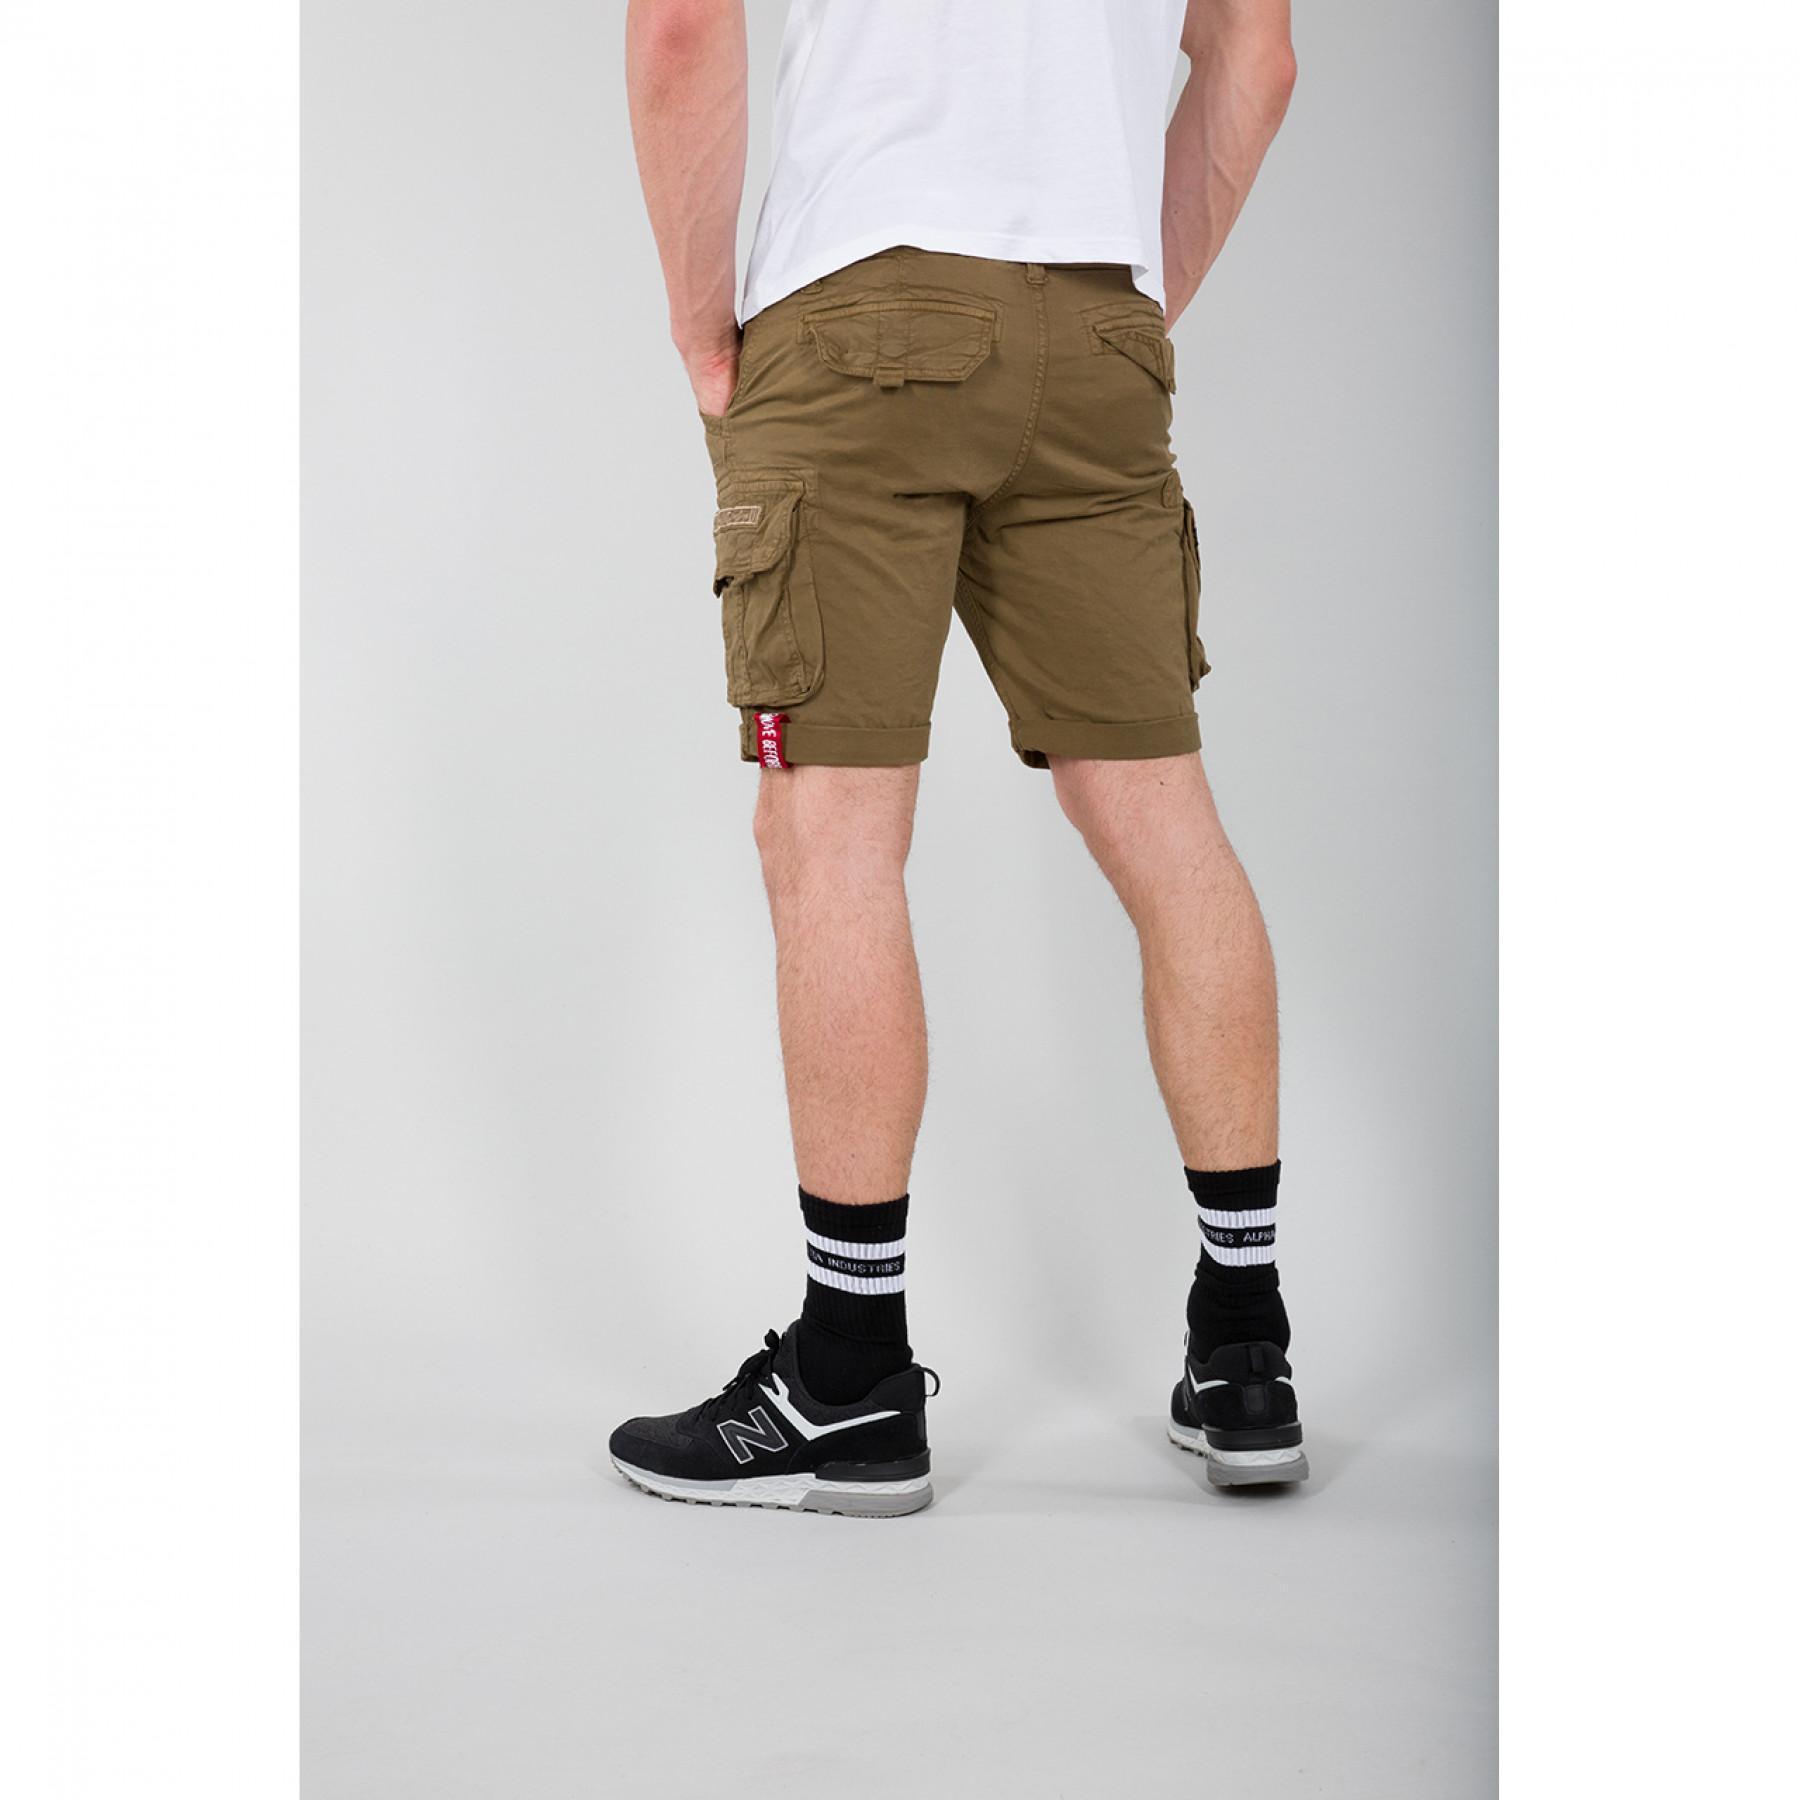 Men - - Crew Short - Alpha Shorts Industries Clothing